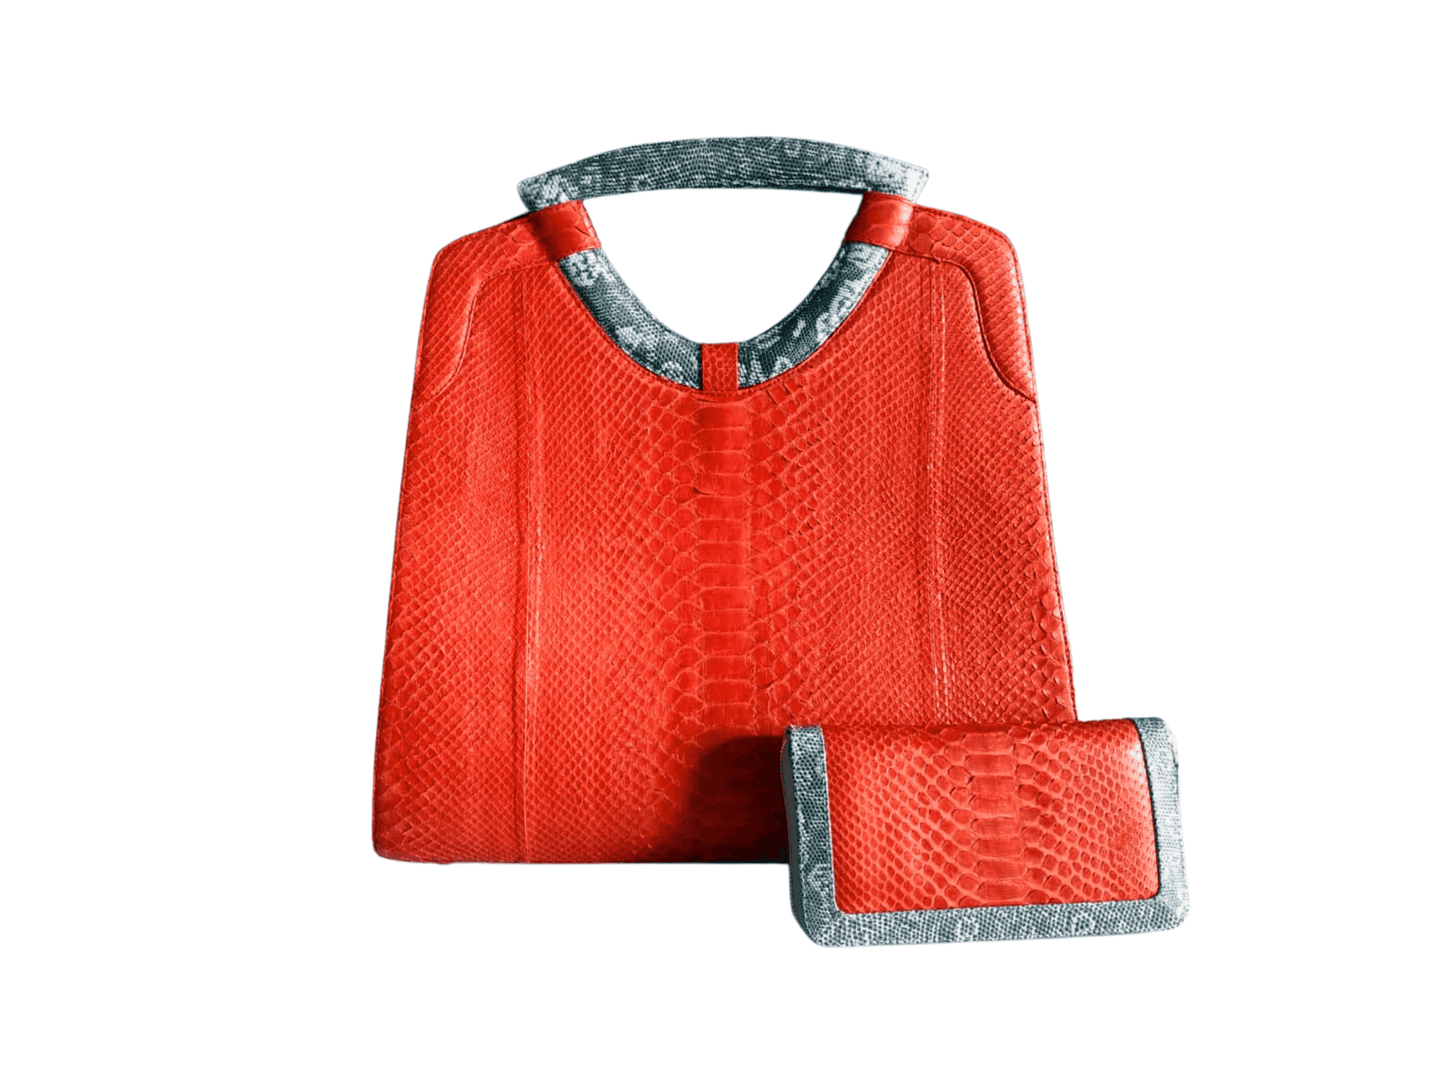 Tote Python Snakeskin Women Bag with Natural Lizard Skin Trim Red Python Jacket by LFM Fashion